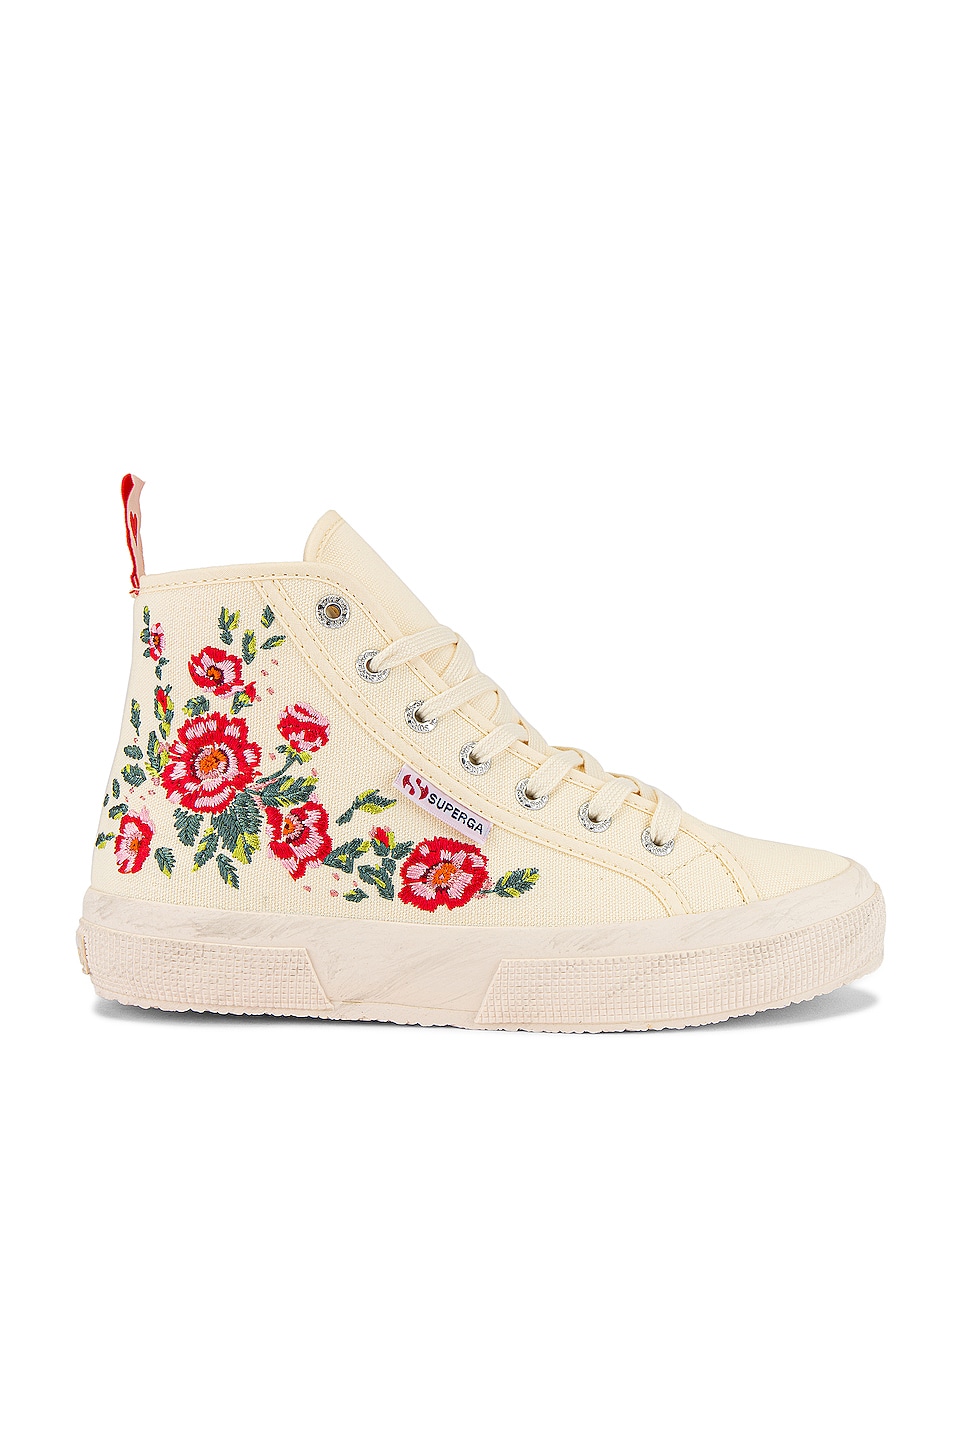 superga floral sneakers